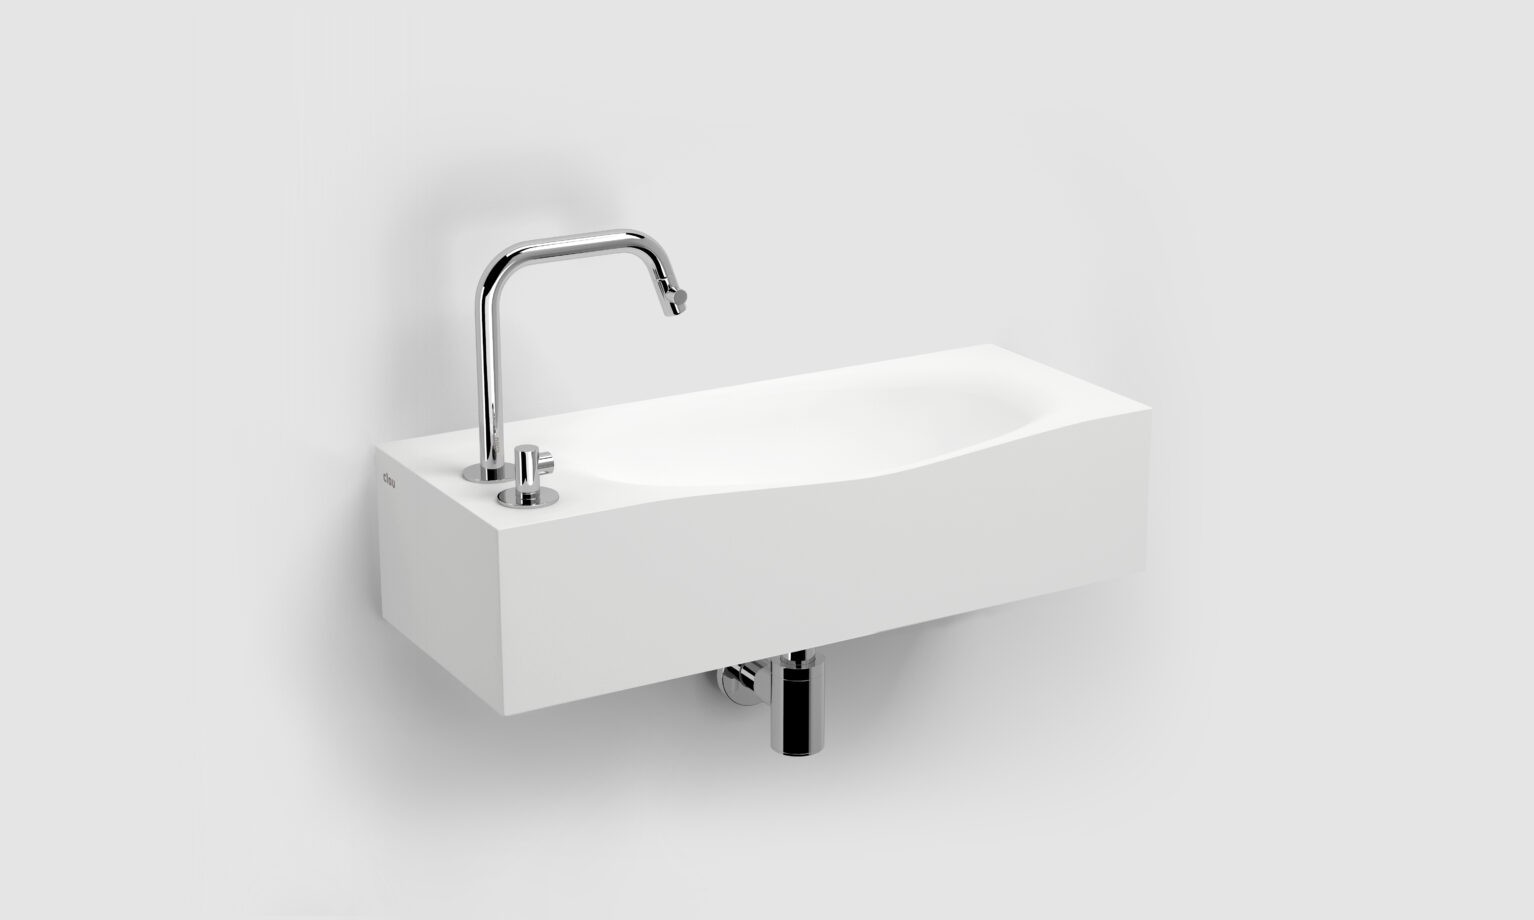 fontein-wastafel-aluite-toilet-badkamer-luxe-sanitair-Hammock-clou-CL0313270-wasbakje-waterstop-kranenbank-links-met-afvoer-plug-overloop-Sp